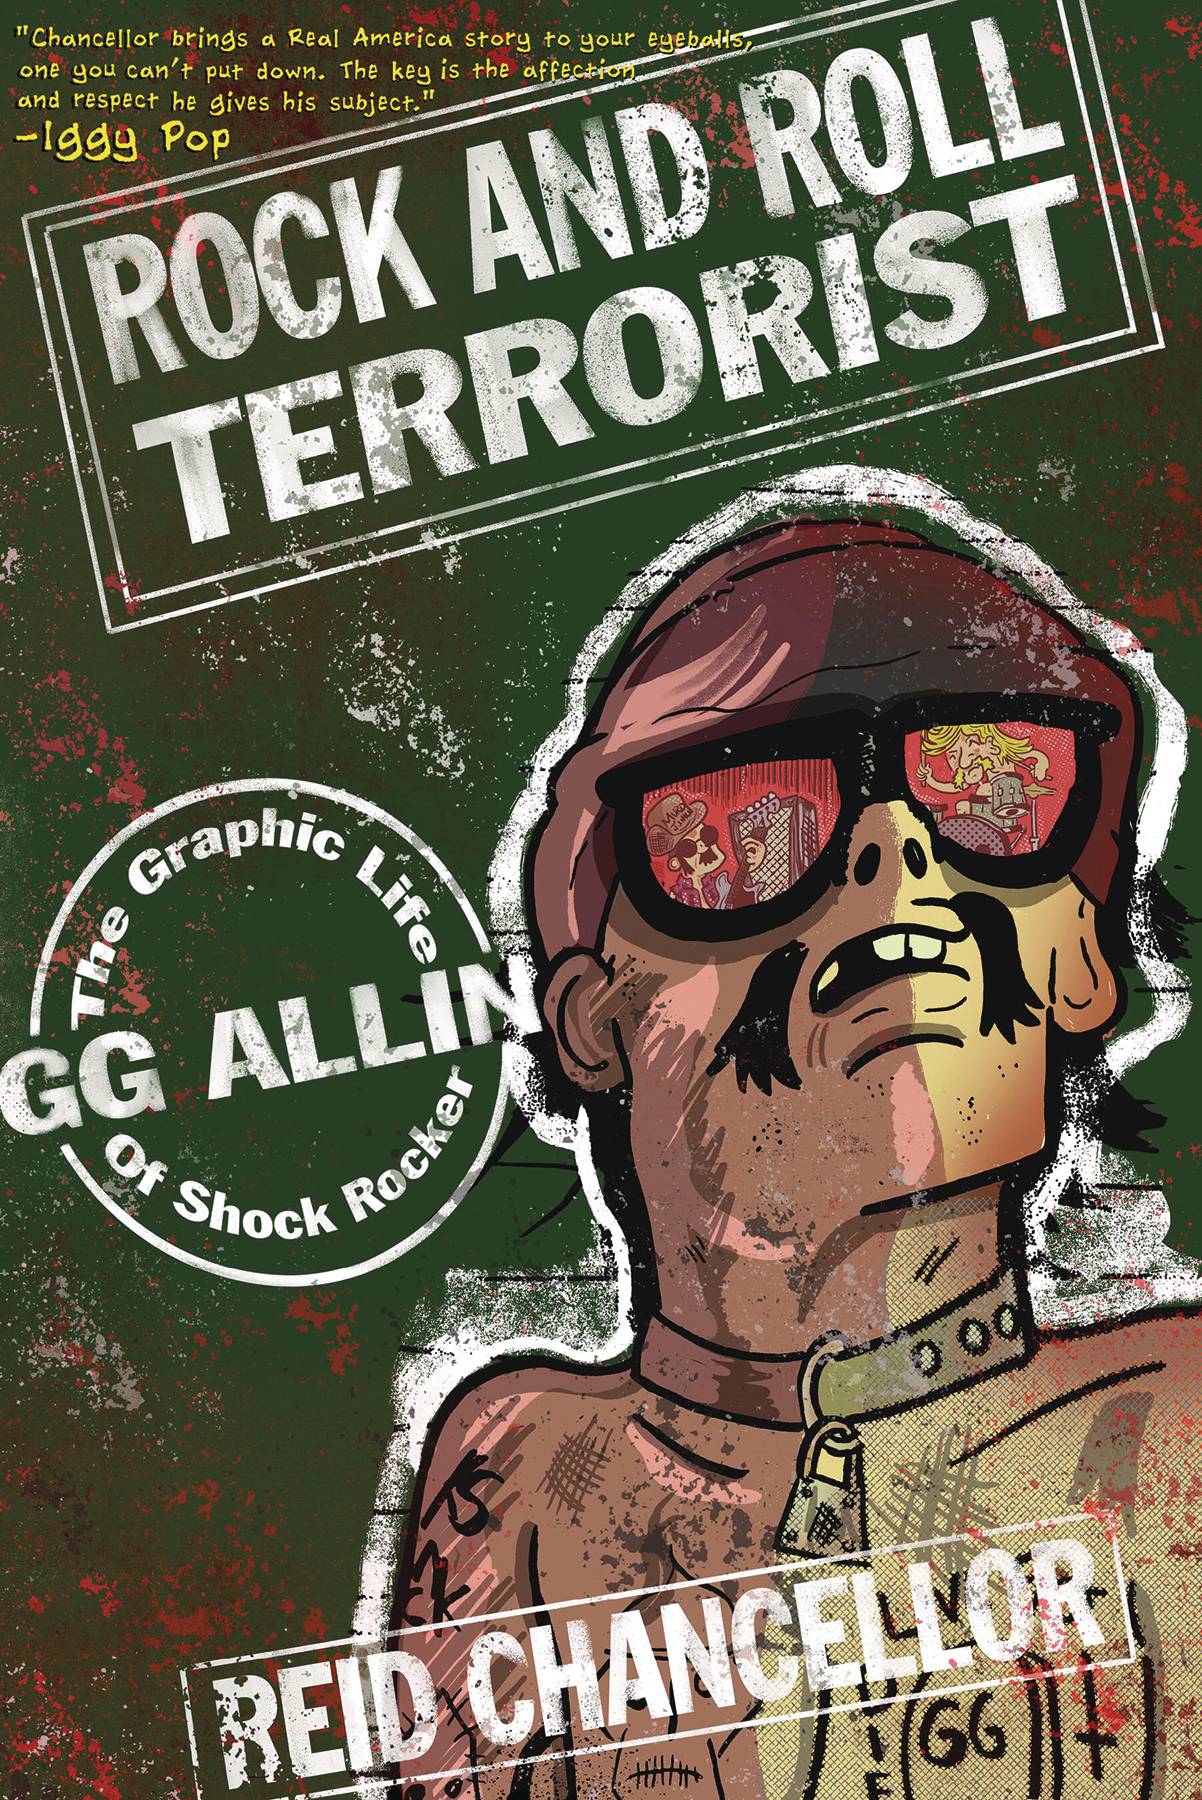 ROCK & ROLL TERRORIST GRAPHIC LIFE SHOCK ROCKER GG ALLIN